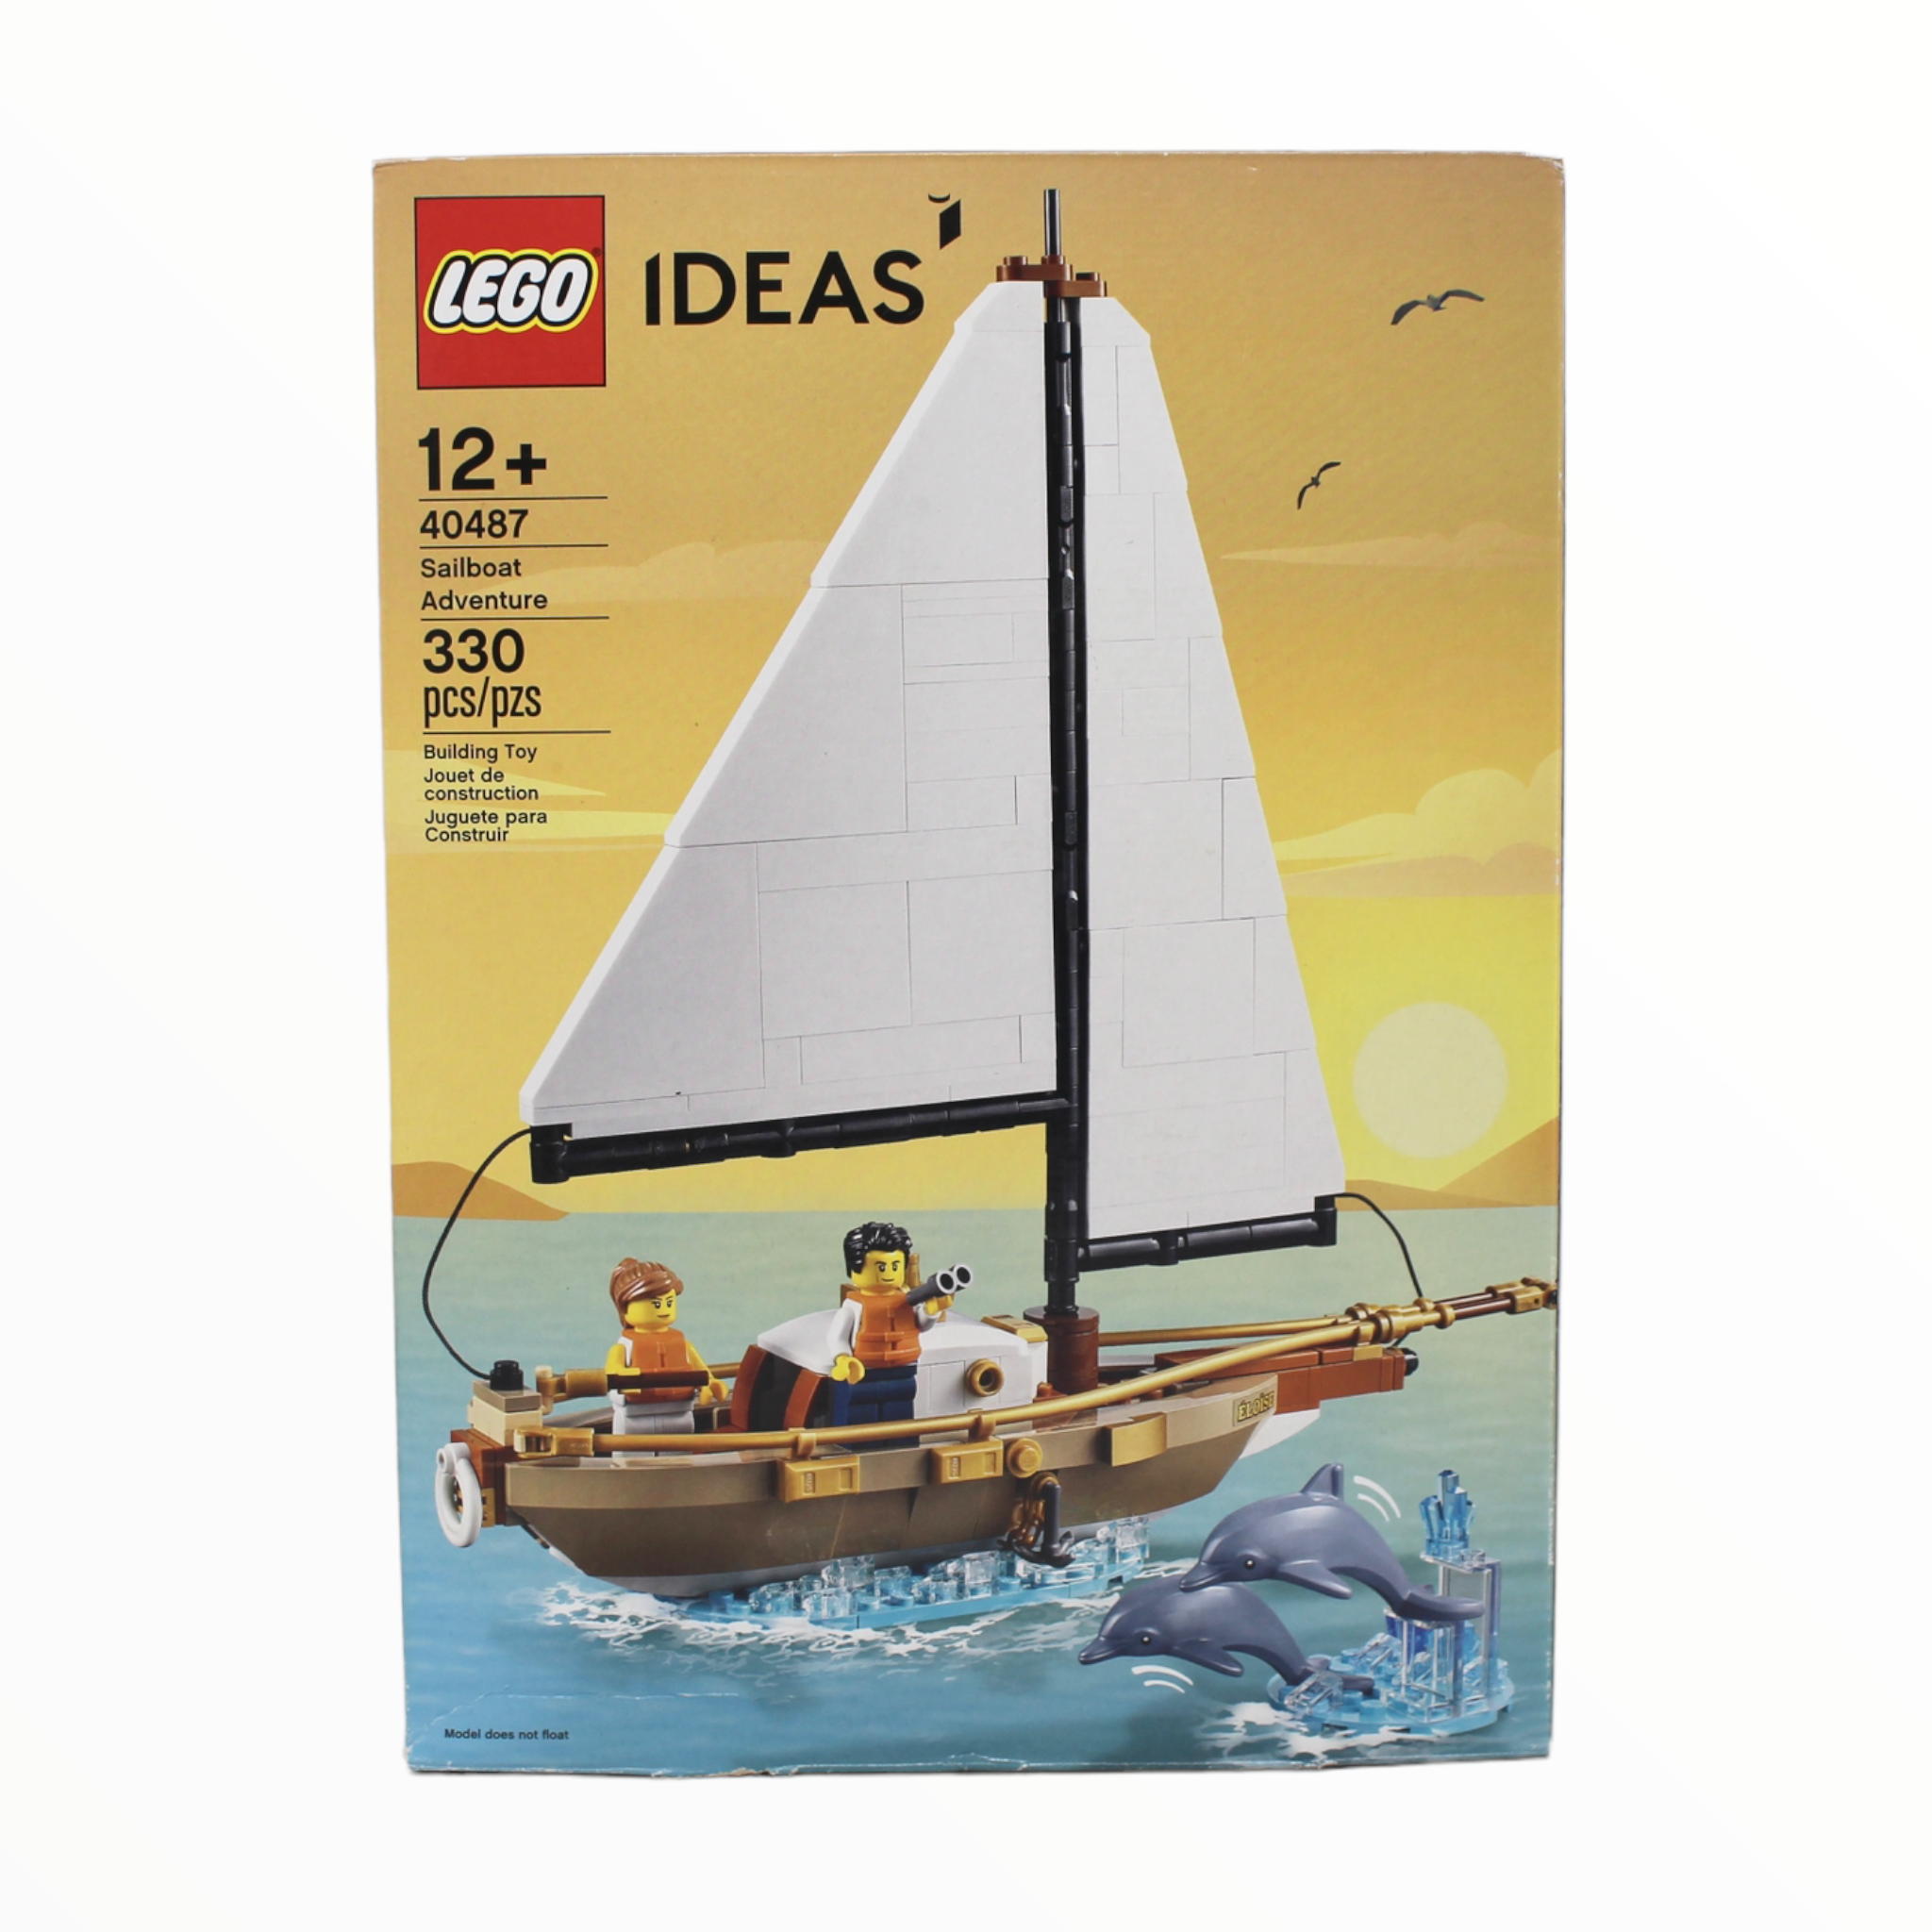 Certified Used Set 40487 LEGO Ideas Sailboat Adventure